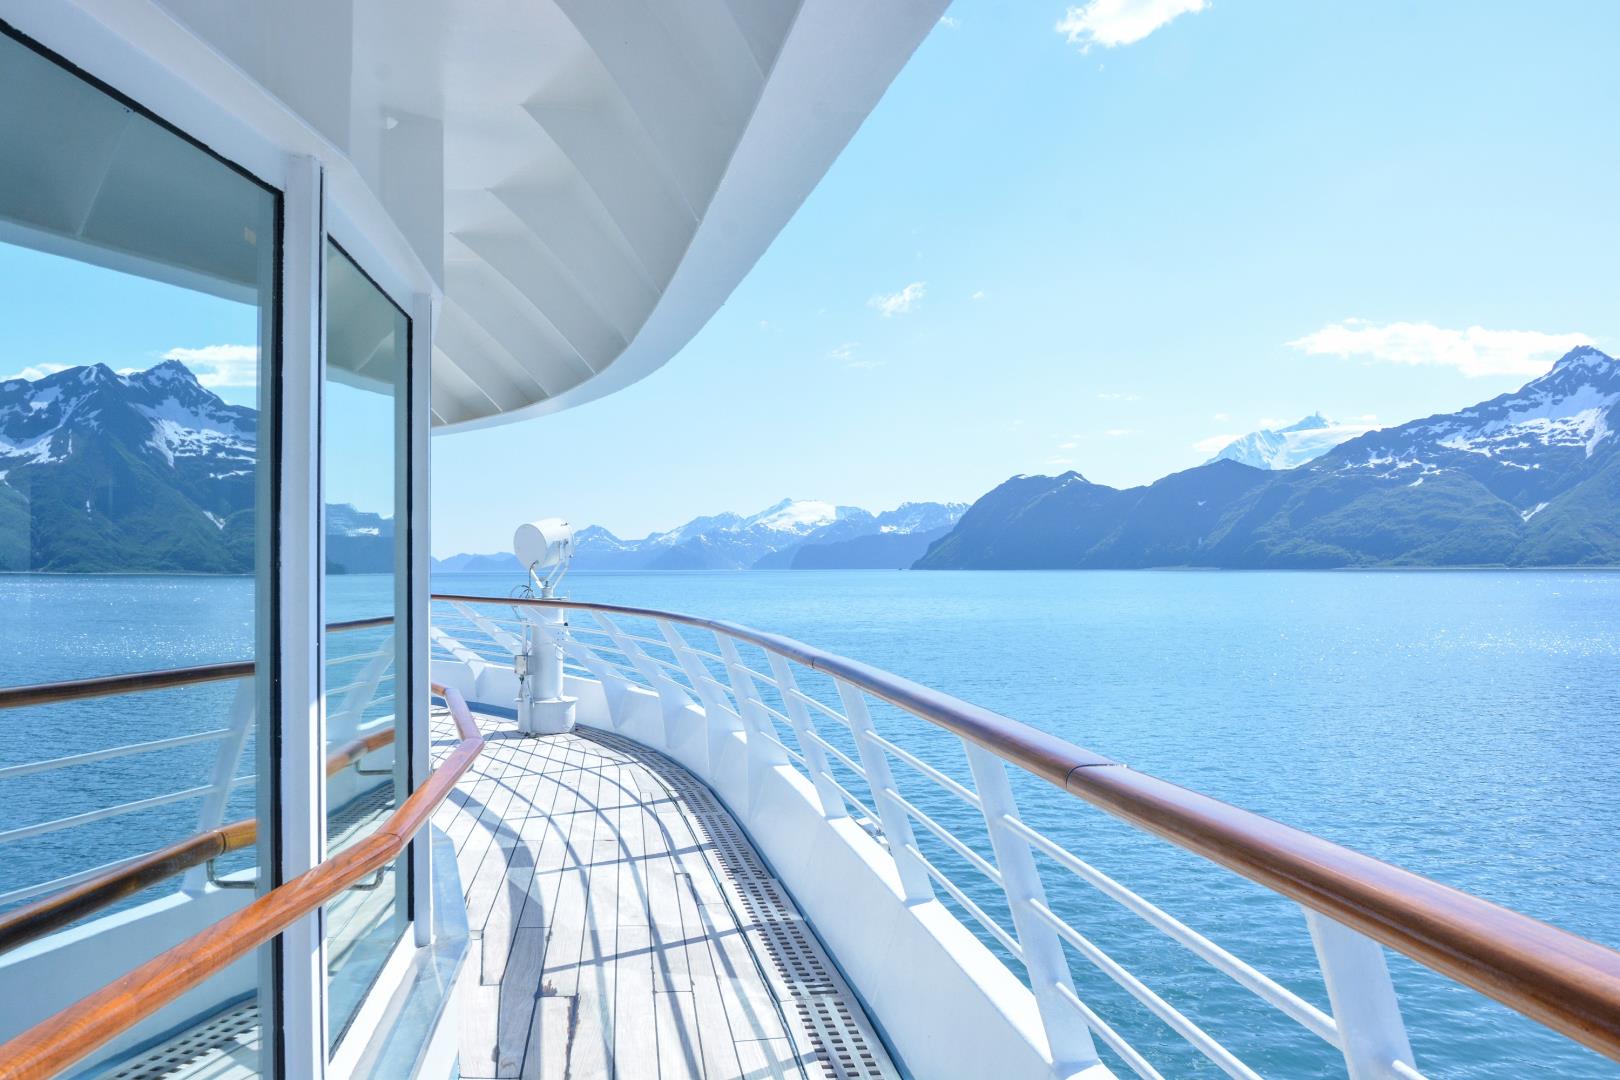 View of wraparound deck with Alaskan mountainscape